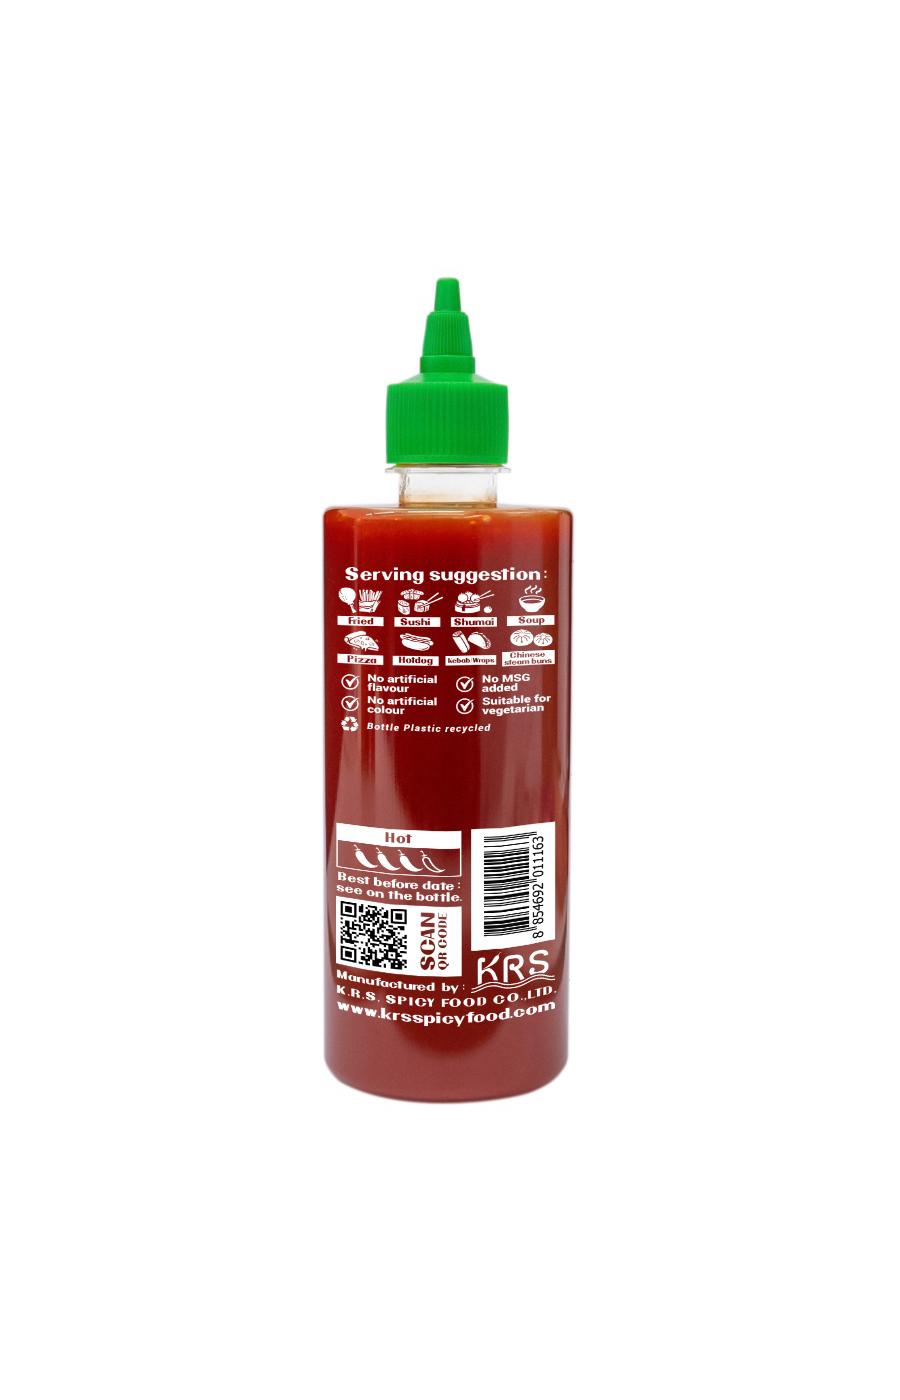 J Lek Sriracha Hot Chili Sauce; image 2 of 3